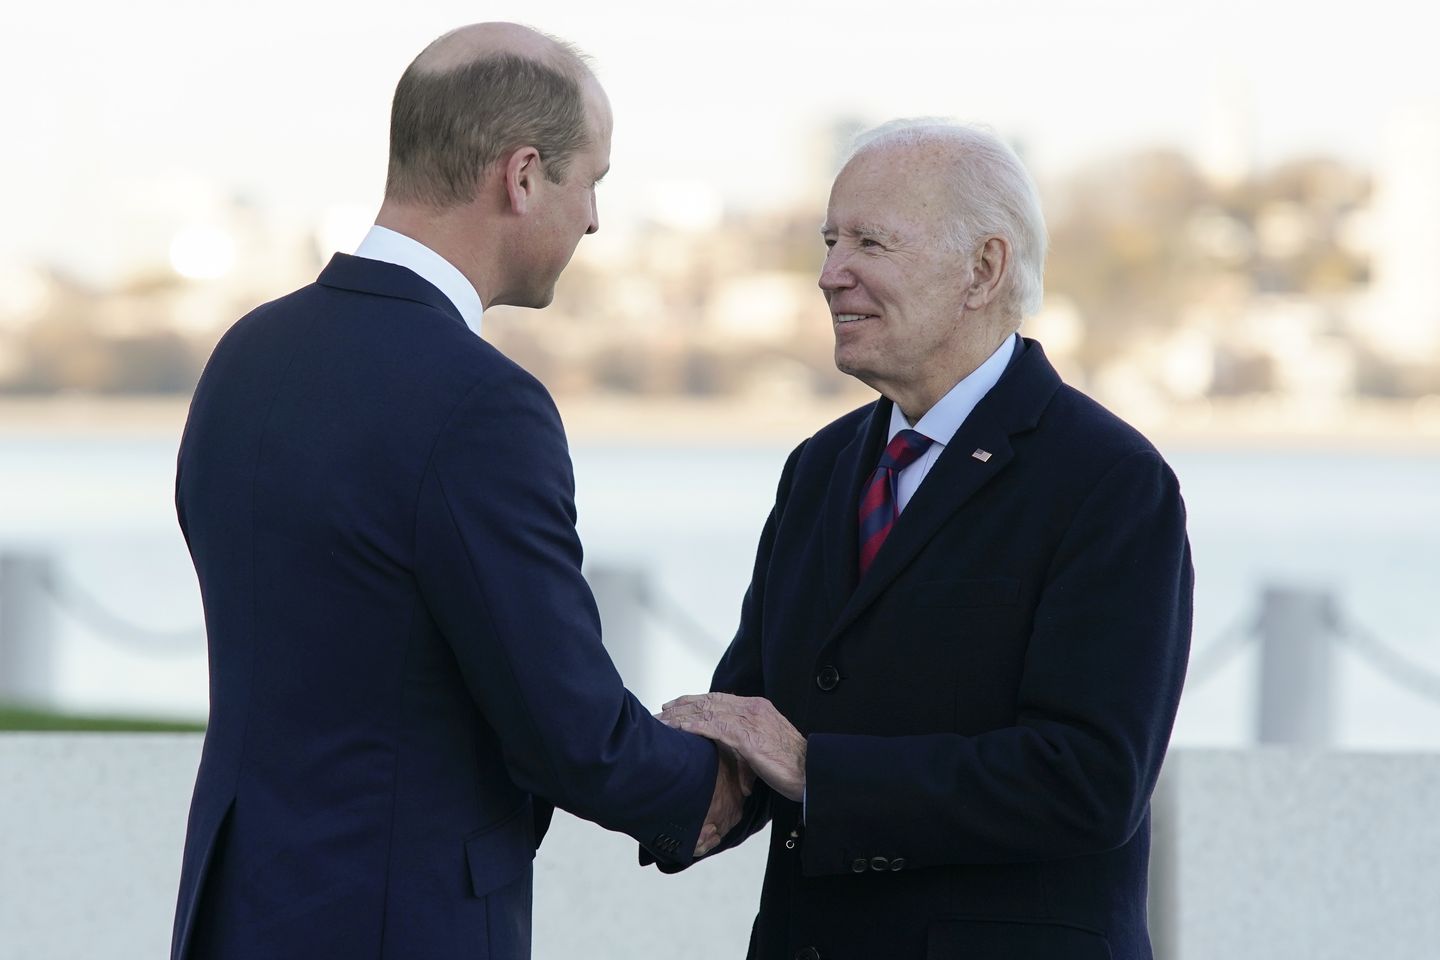 Biden, Prince Wiliam meet to discuss climate change